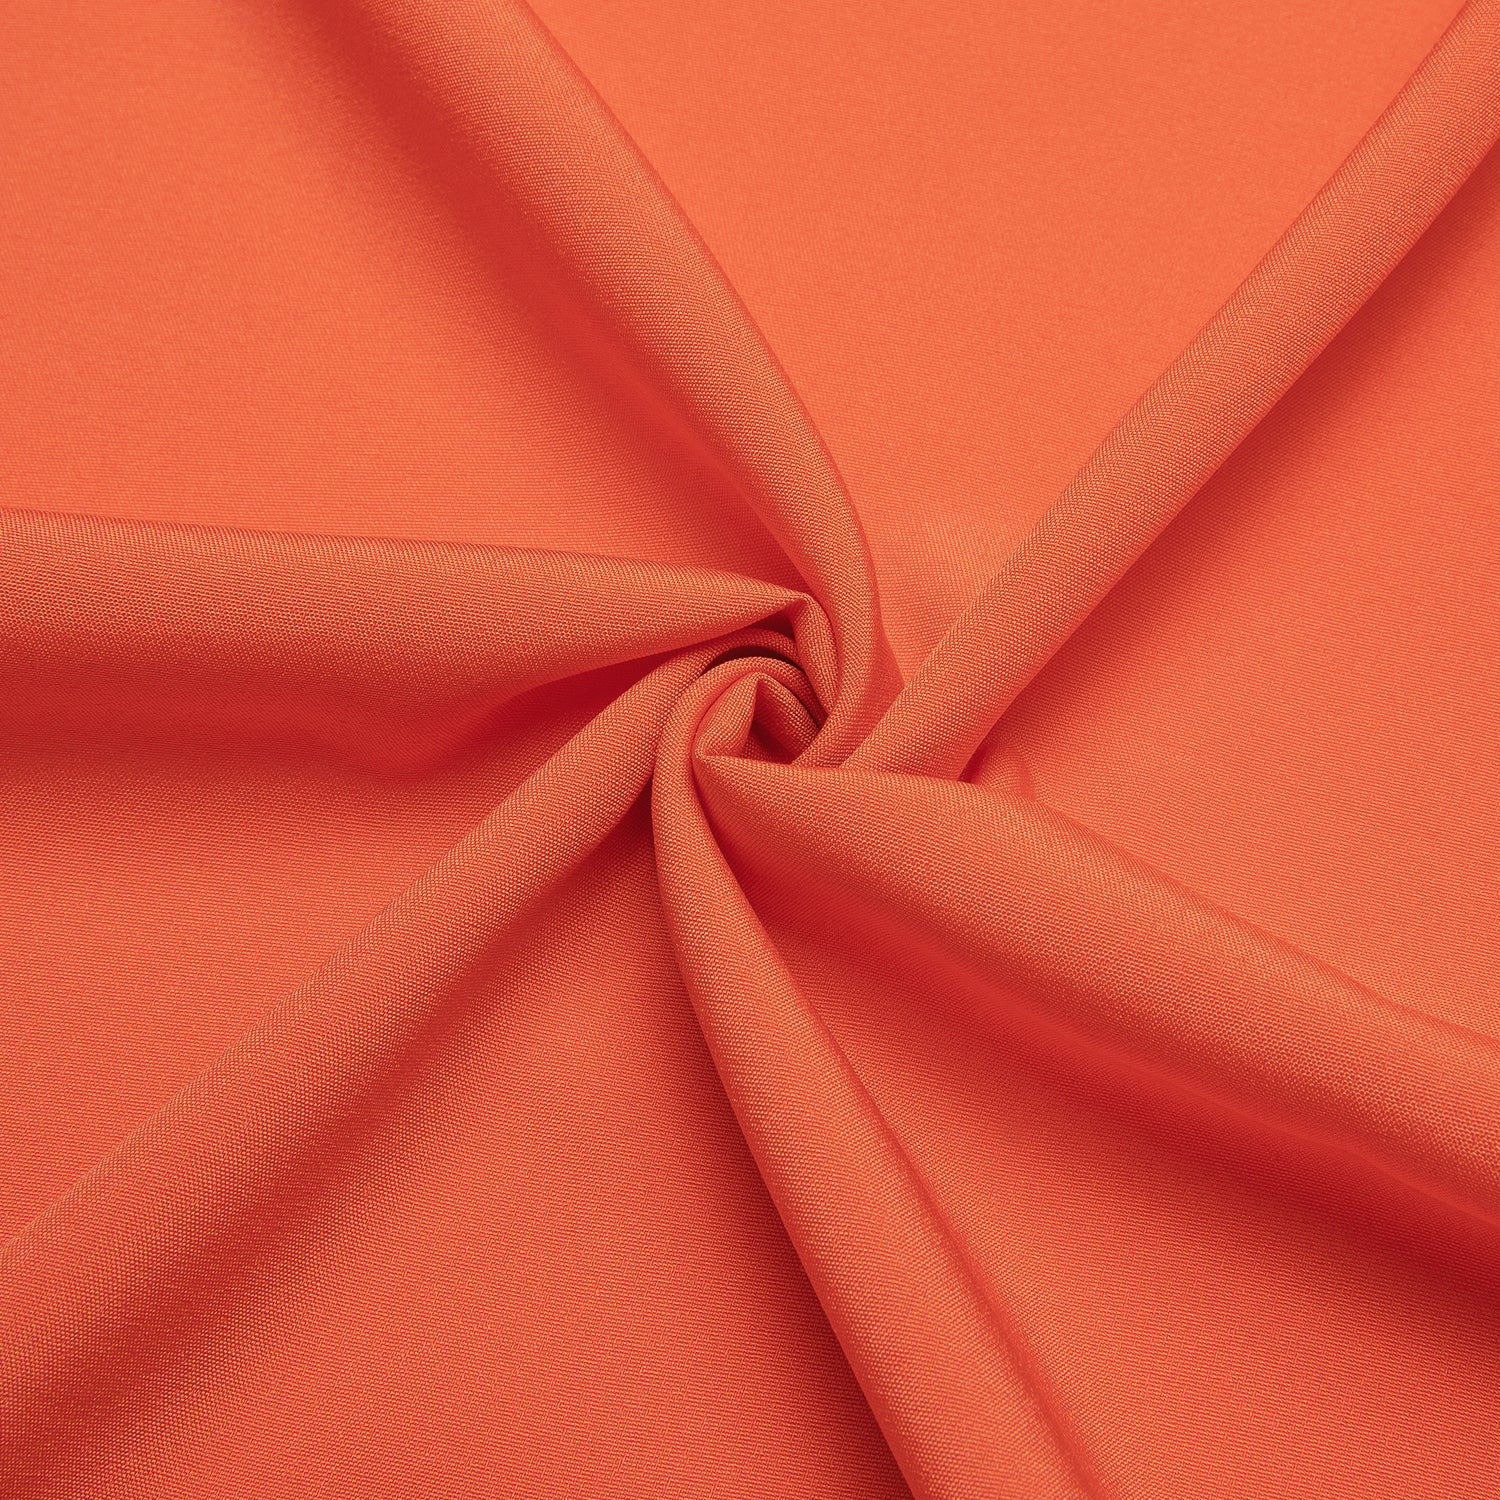 Orange Solid Four-way Stretch Fabric Men's Long Sleeve Shirt